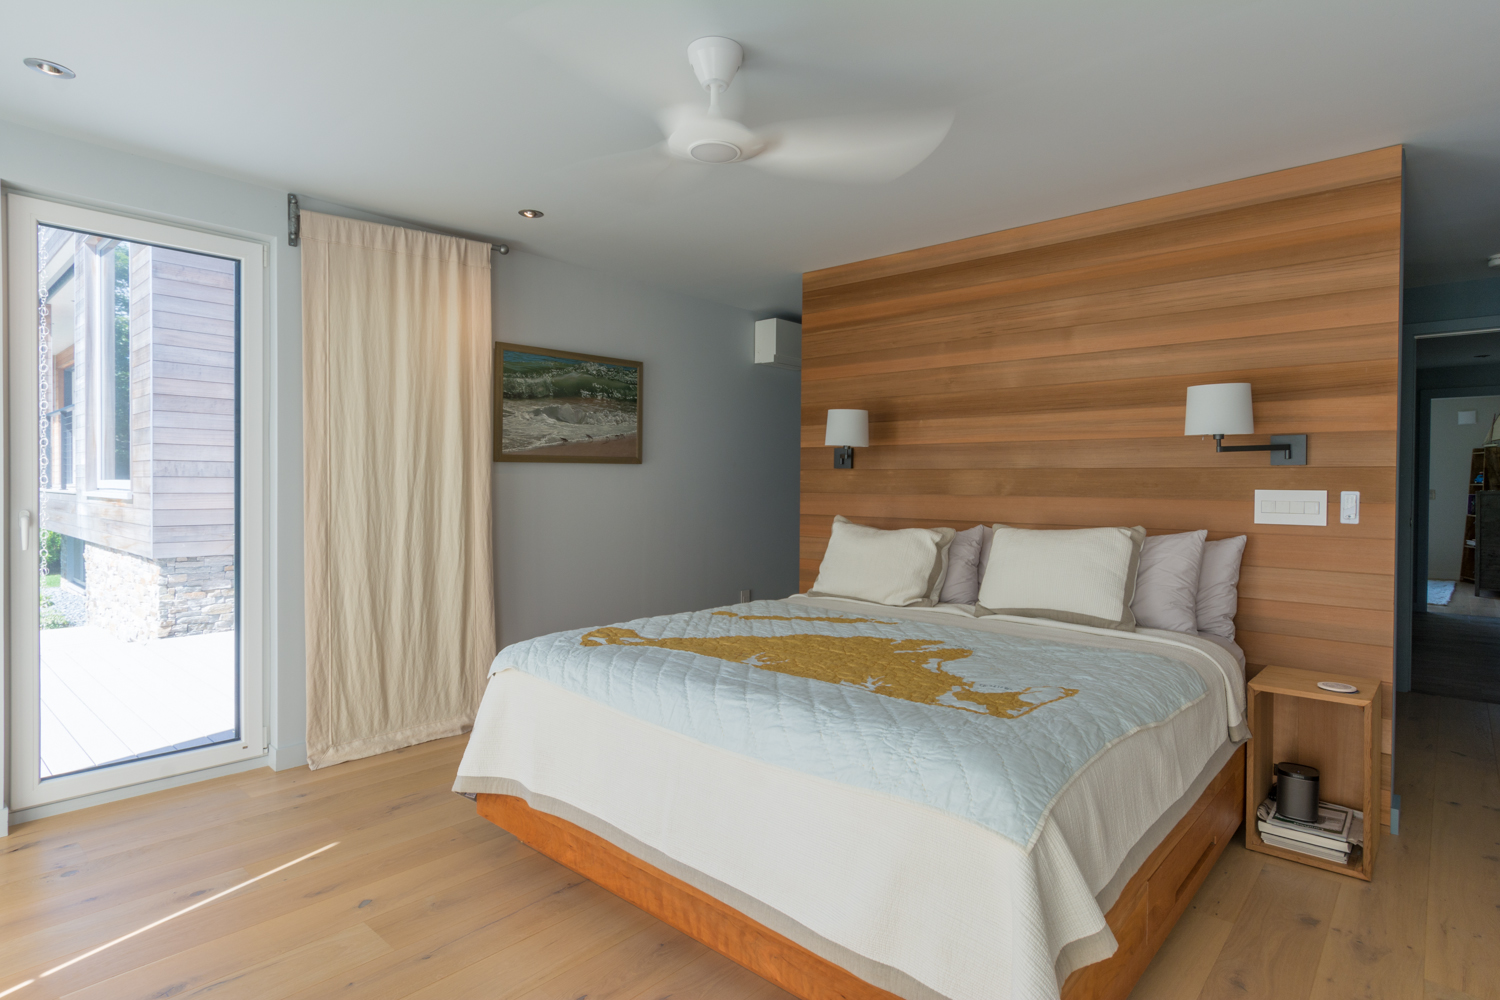 Bedroom with built in paneled headboard